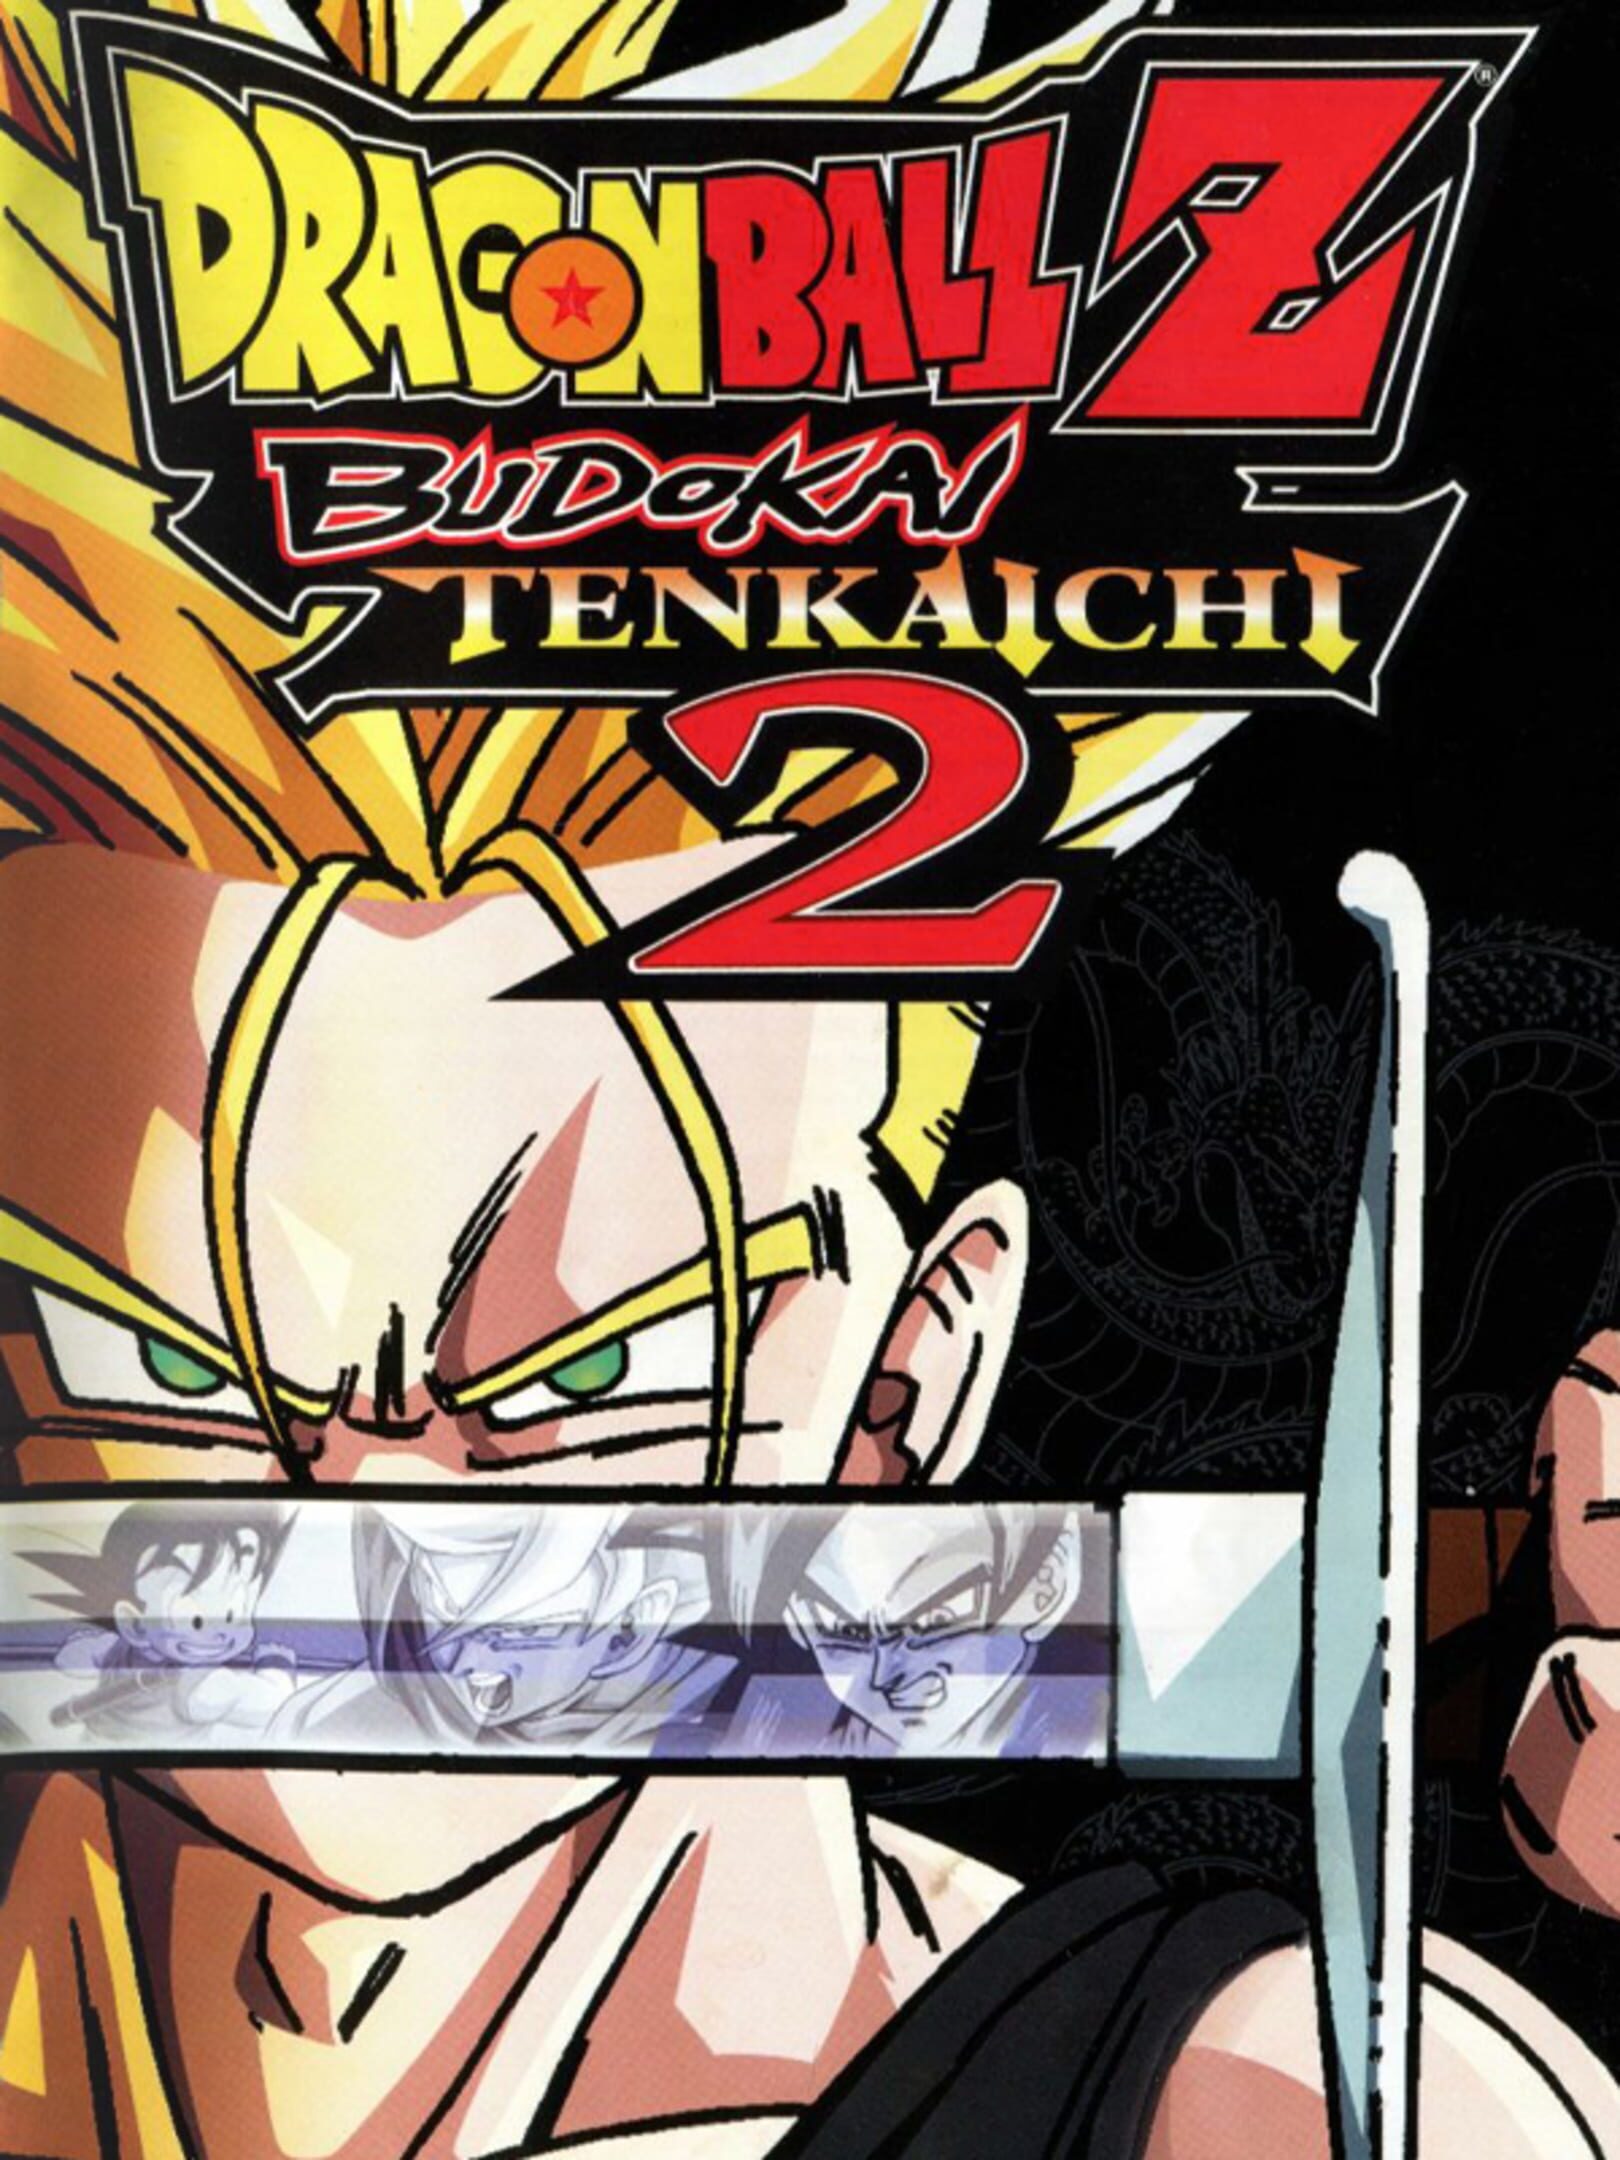 DBZ: Budokai Tenkaichi 3 (PS2) walkthrough - Yamcha 